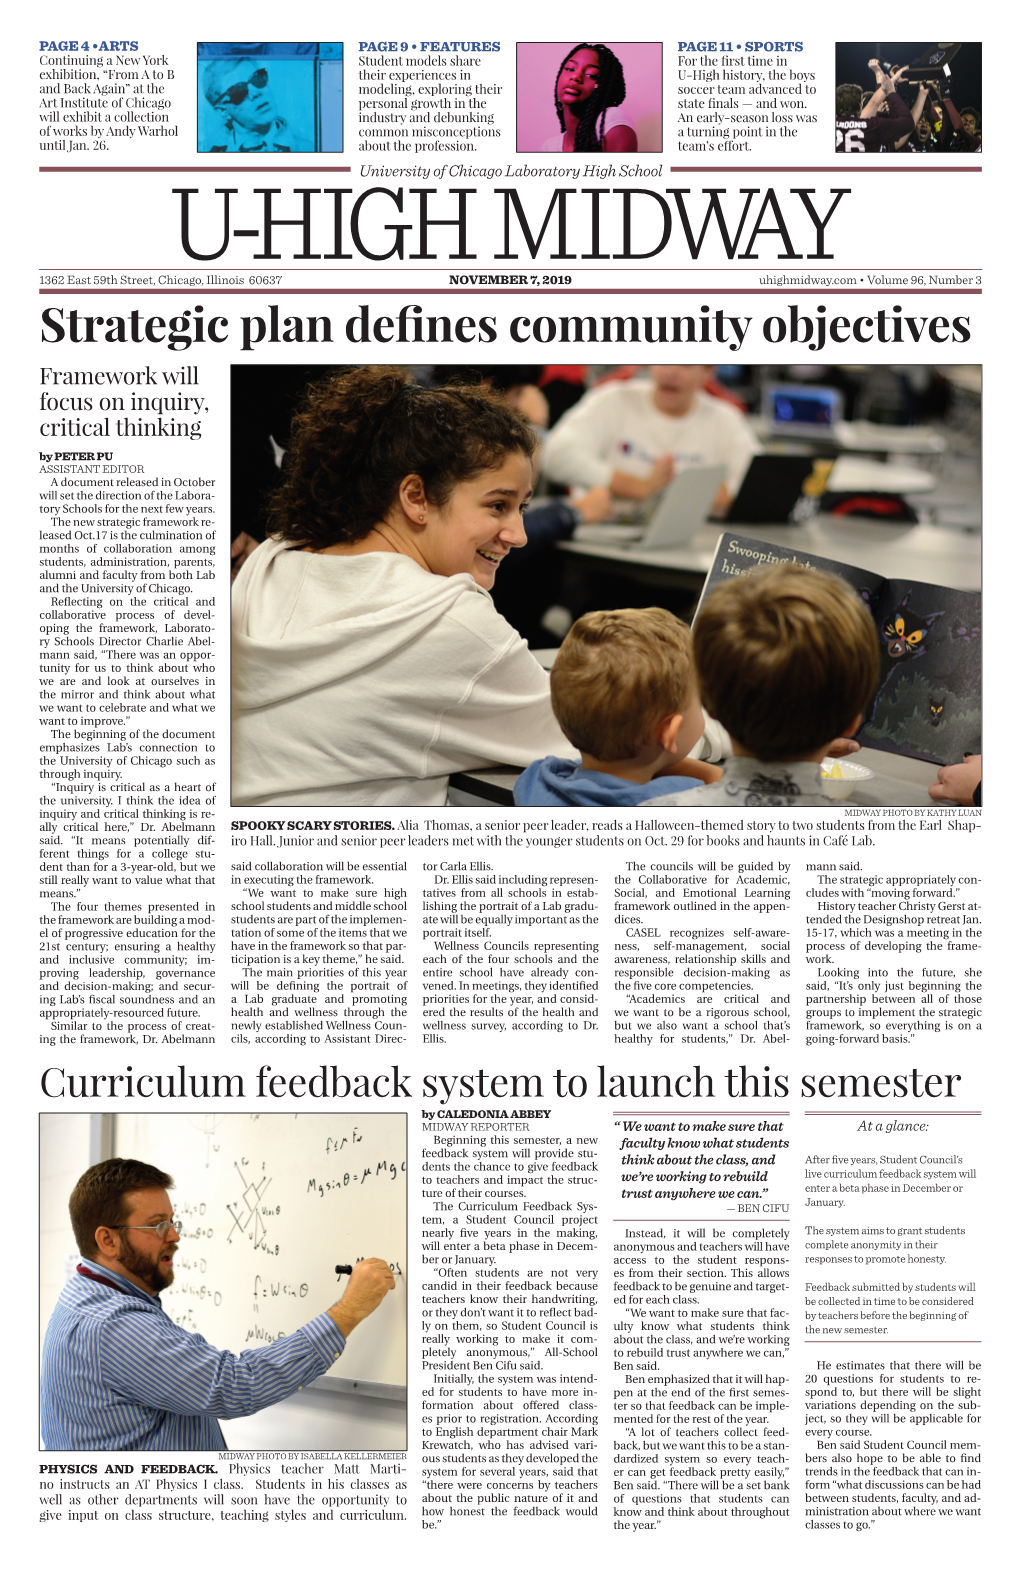 Strategic Plan Defines Community Objectives